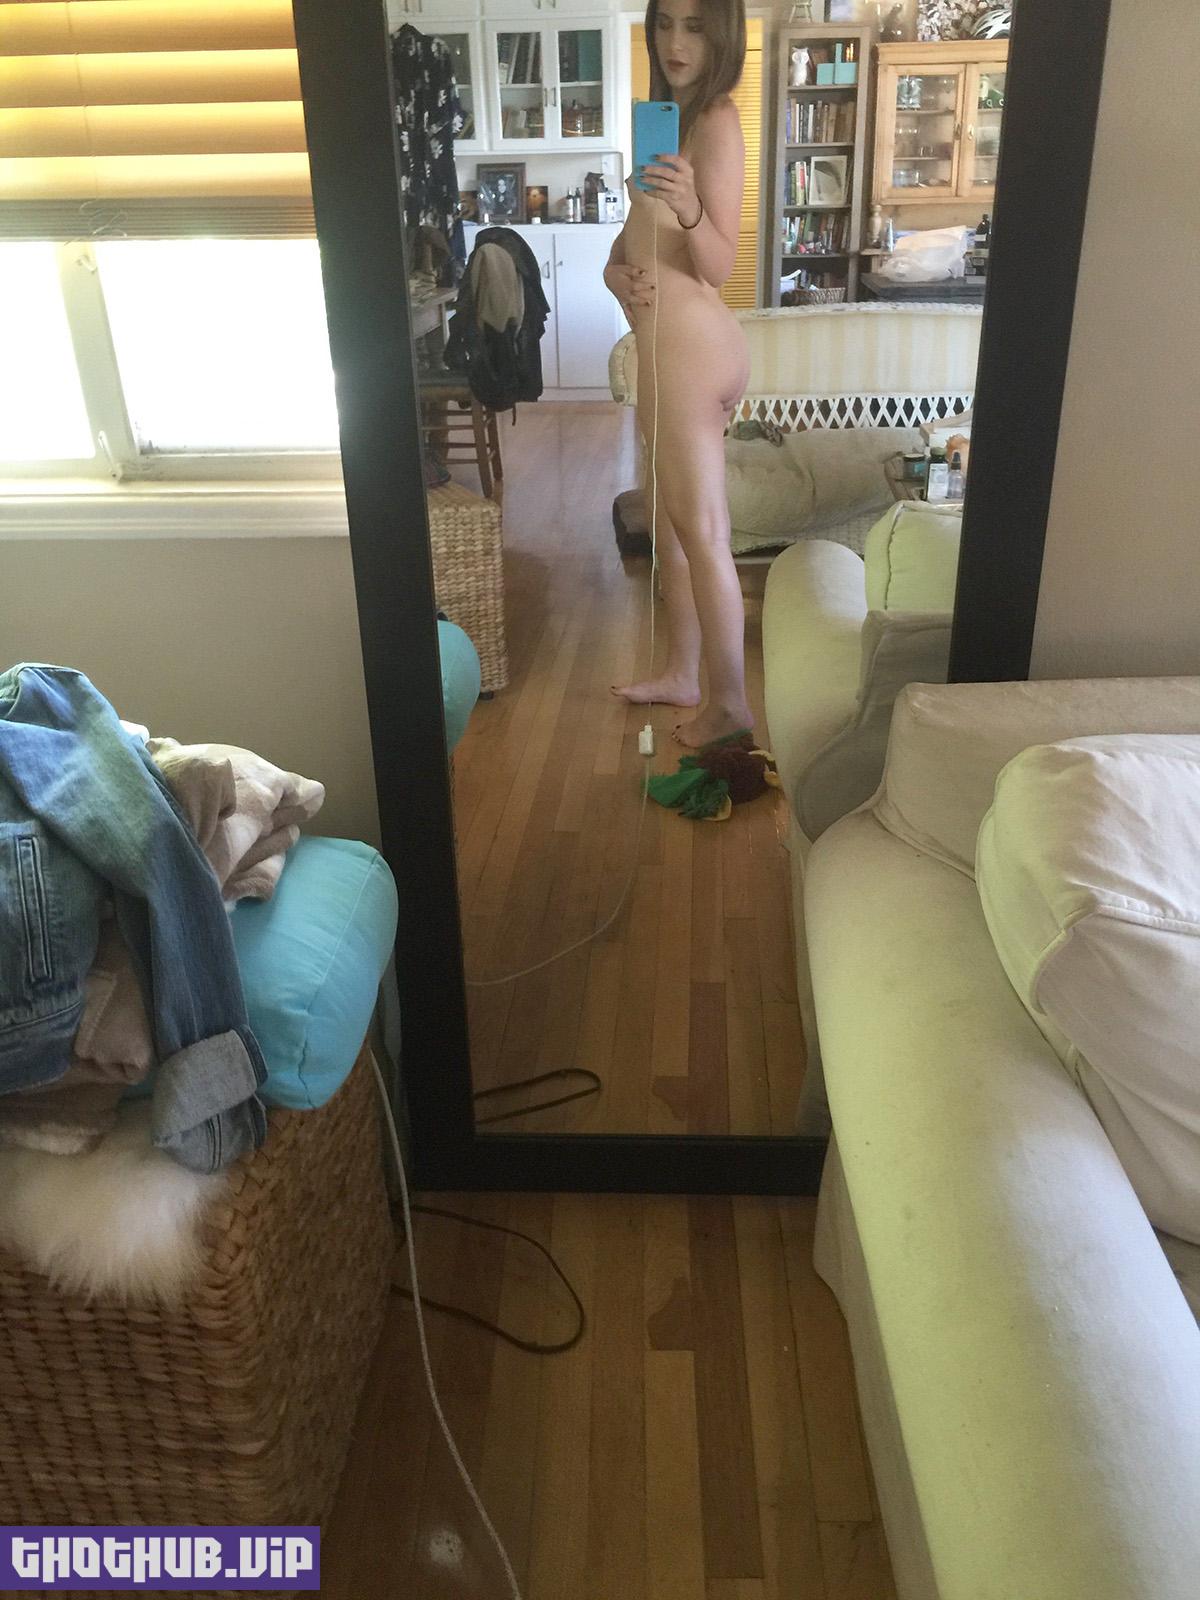 Alexa Nikolas nude photos and video leaked The Fappening